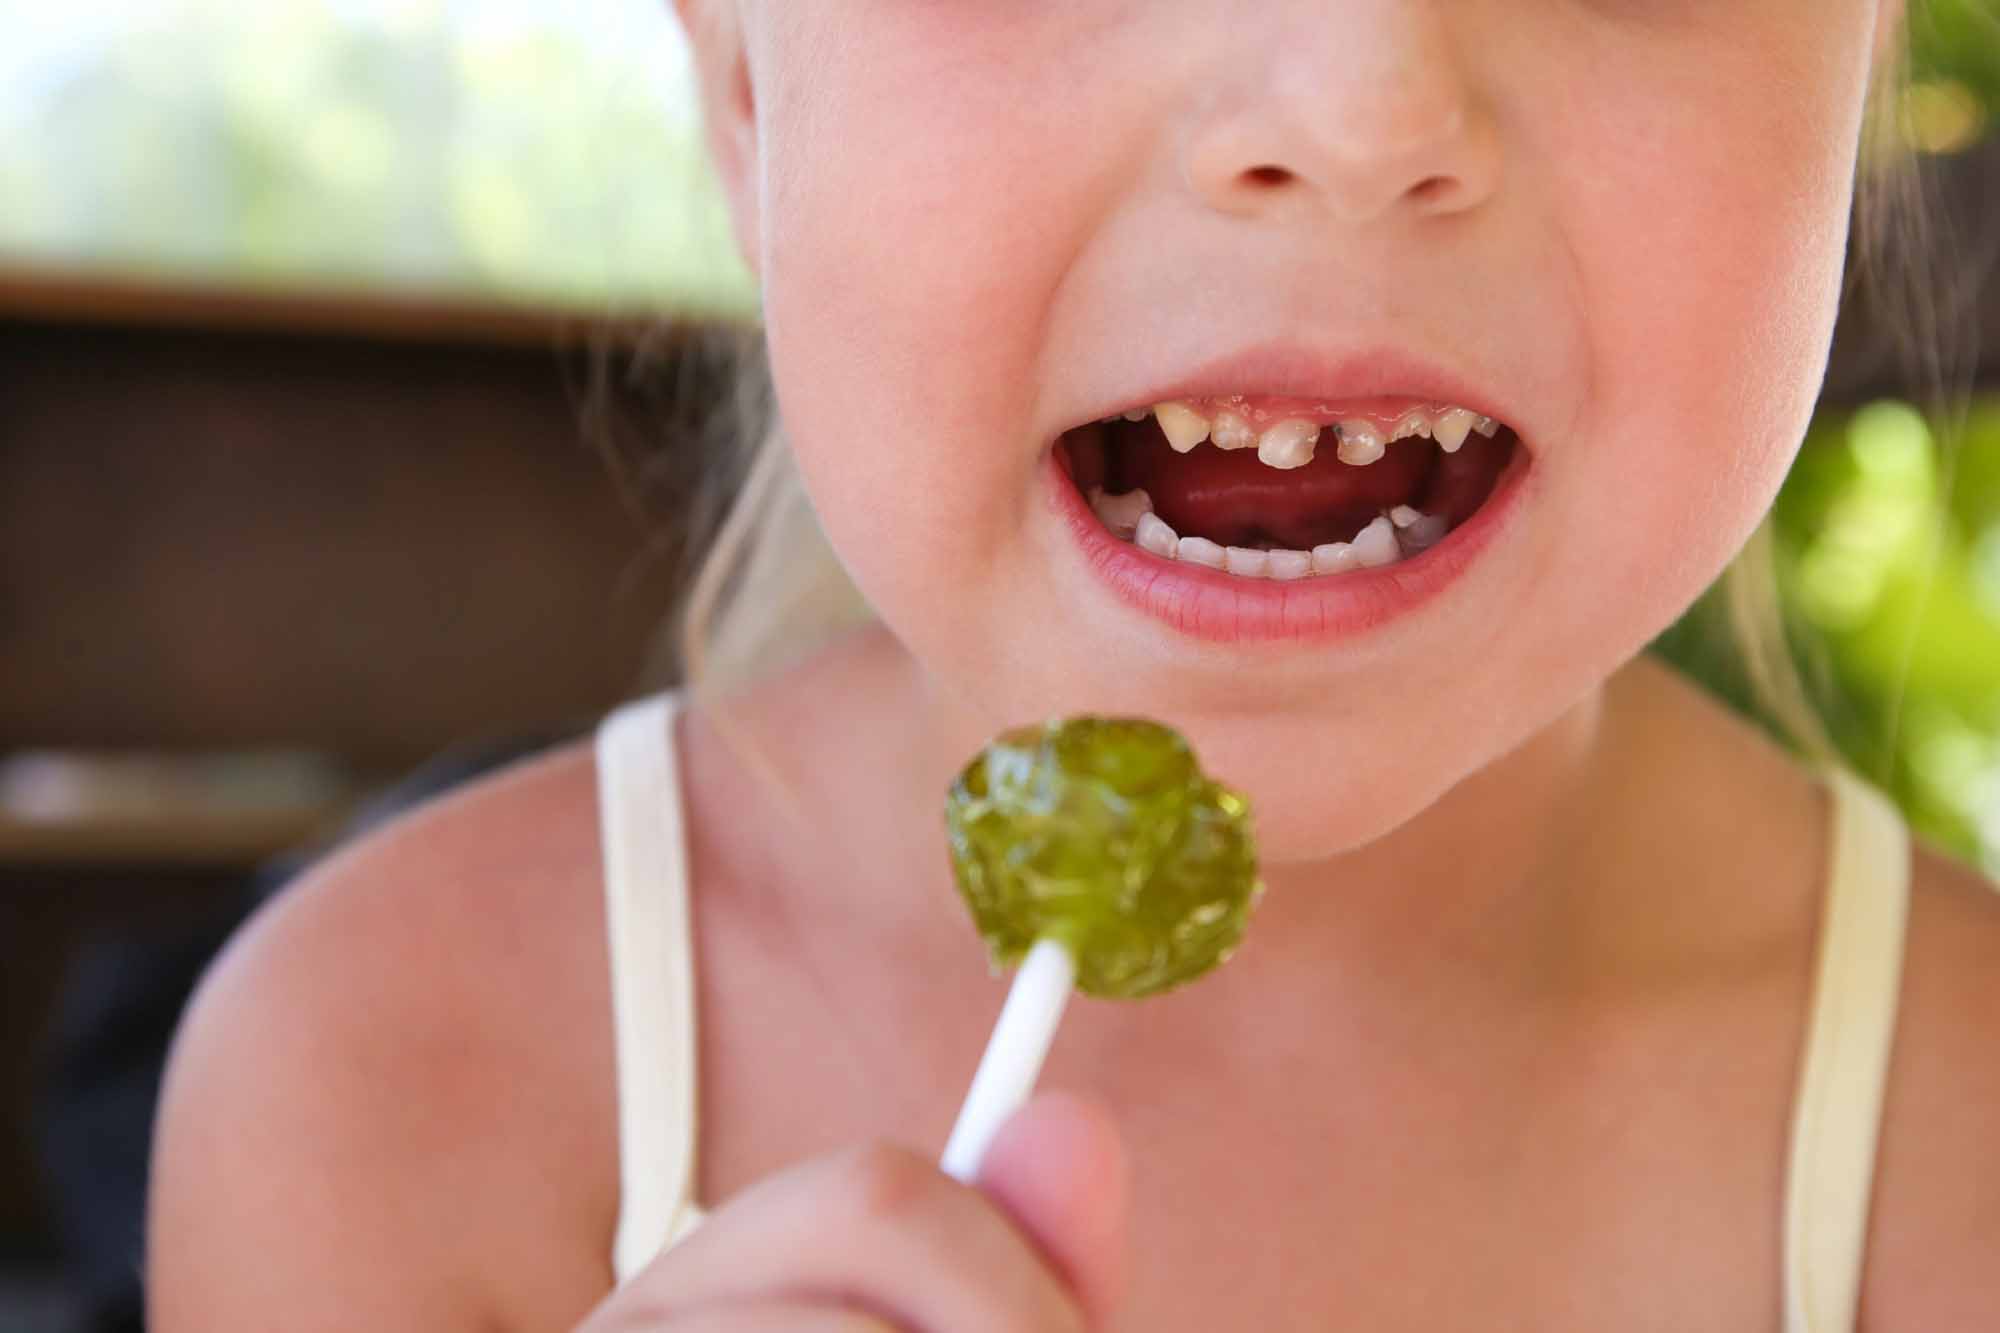 Child eating candy, ruining his teeth - Smart Pediatric Dentistry, Utah